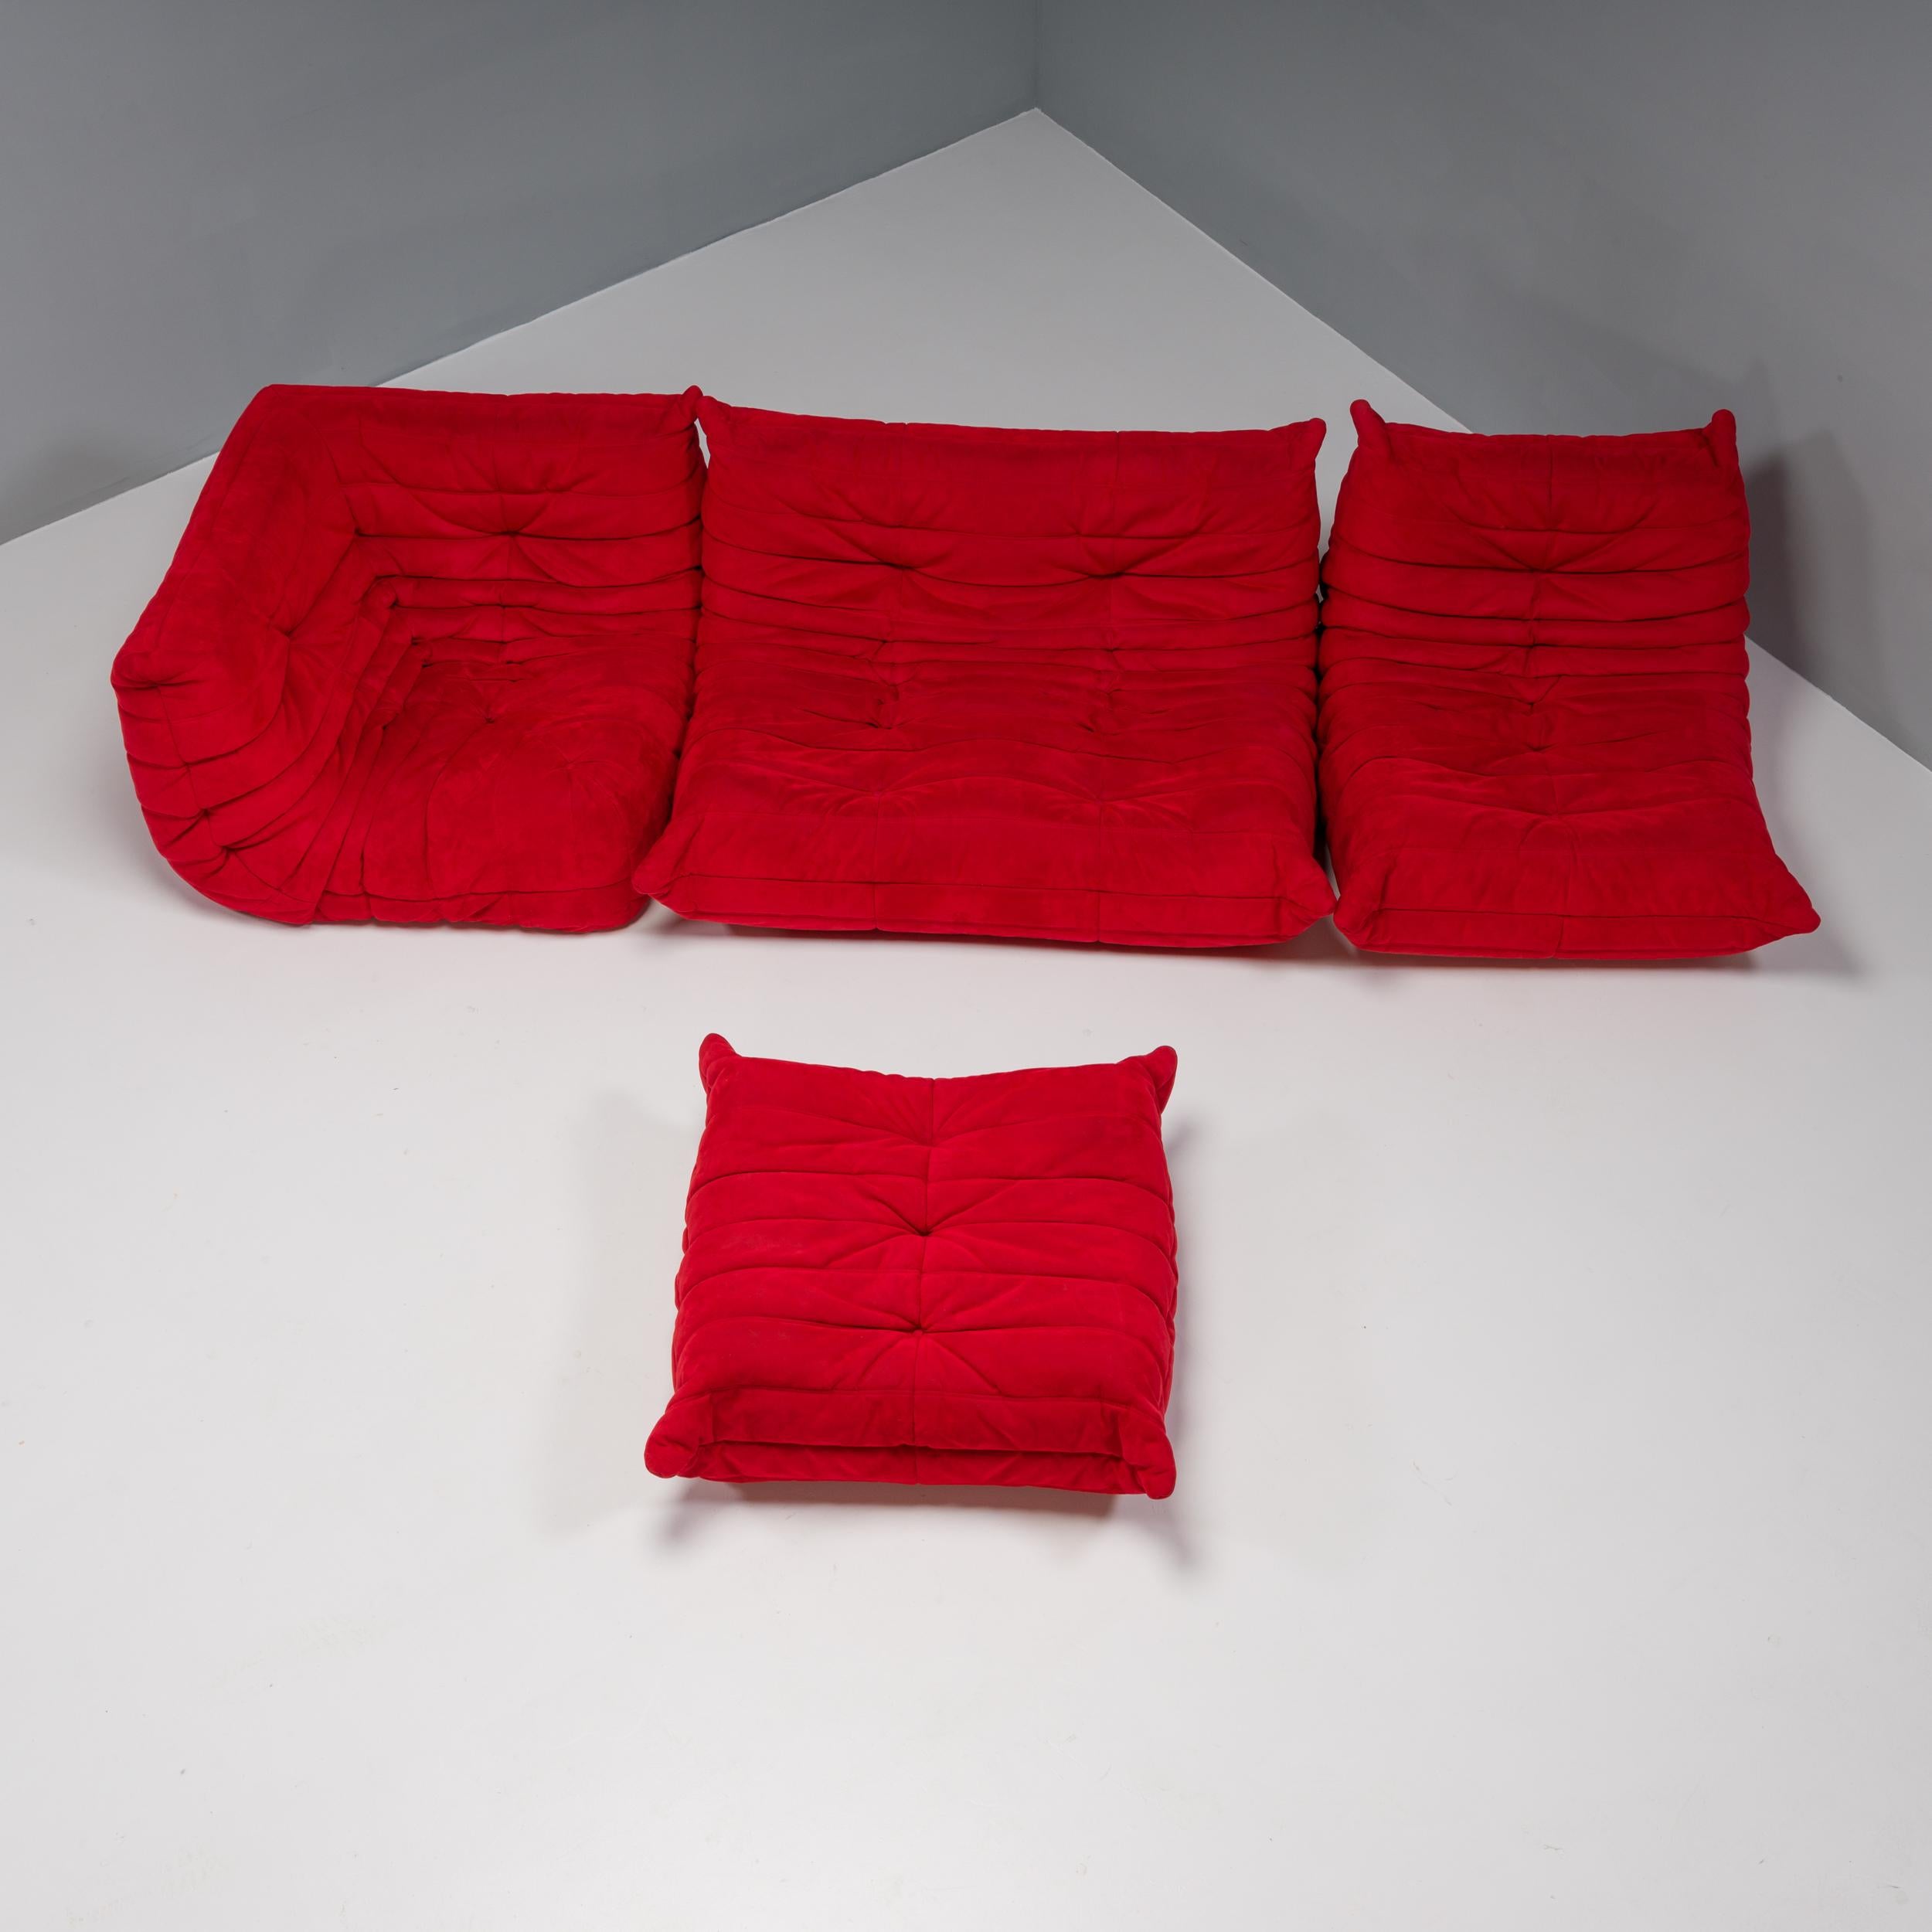 Ligne Roset by Michel Ducaroy Togo Red Modular Sofa, Set of 4 2